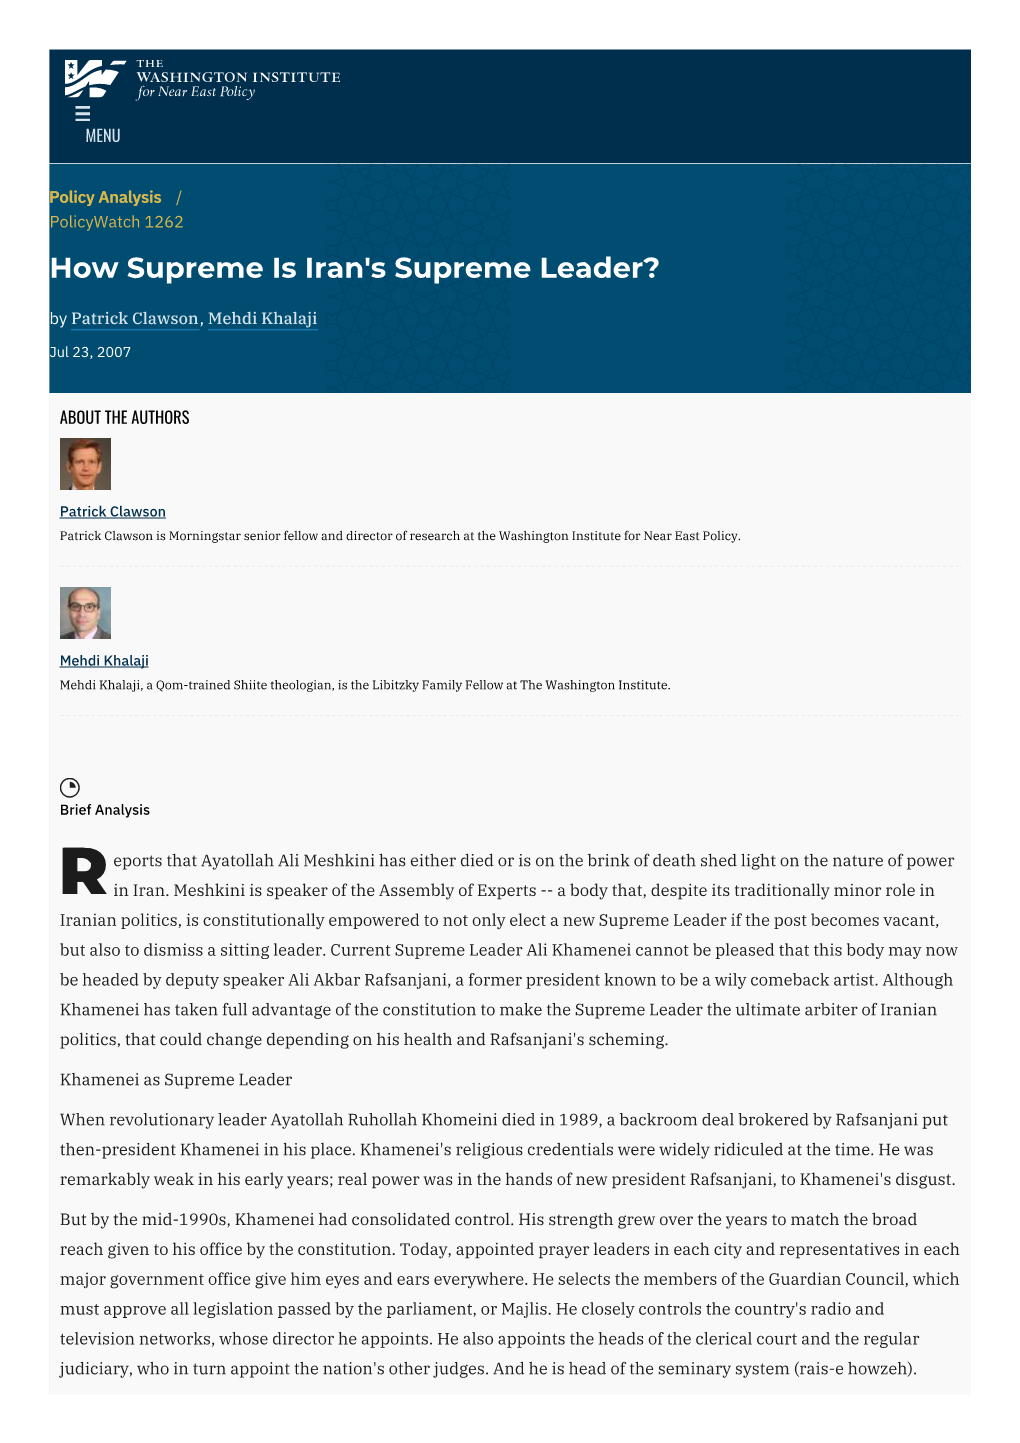 How Supreme Is Iran's Supreme Leader? | the Washington Institute